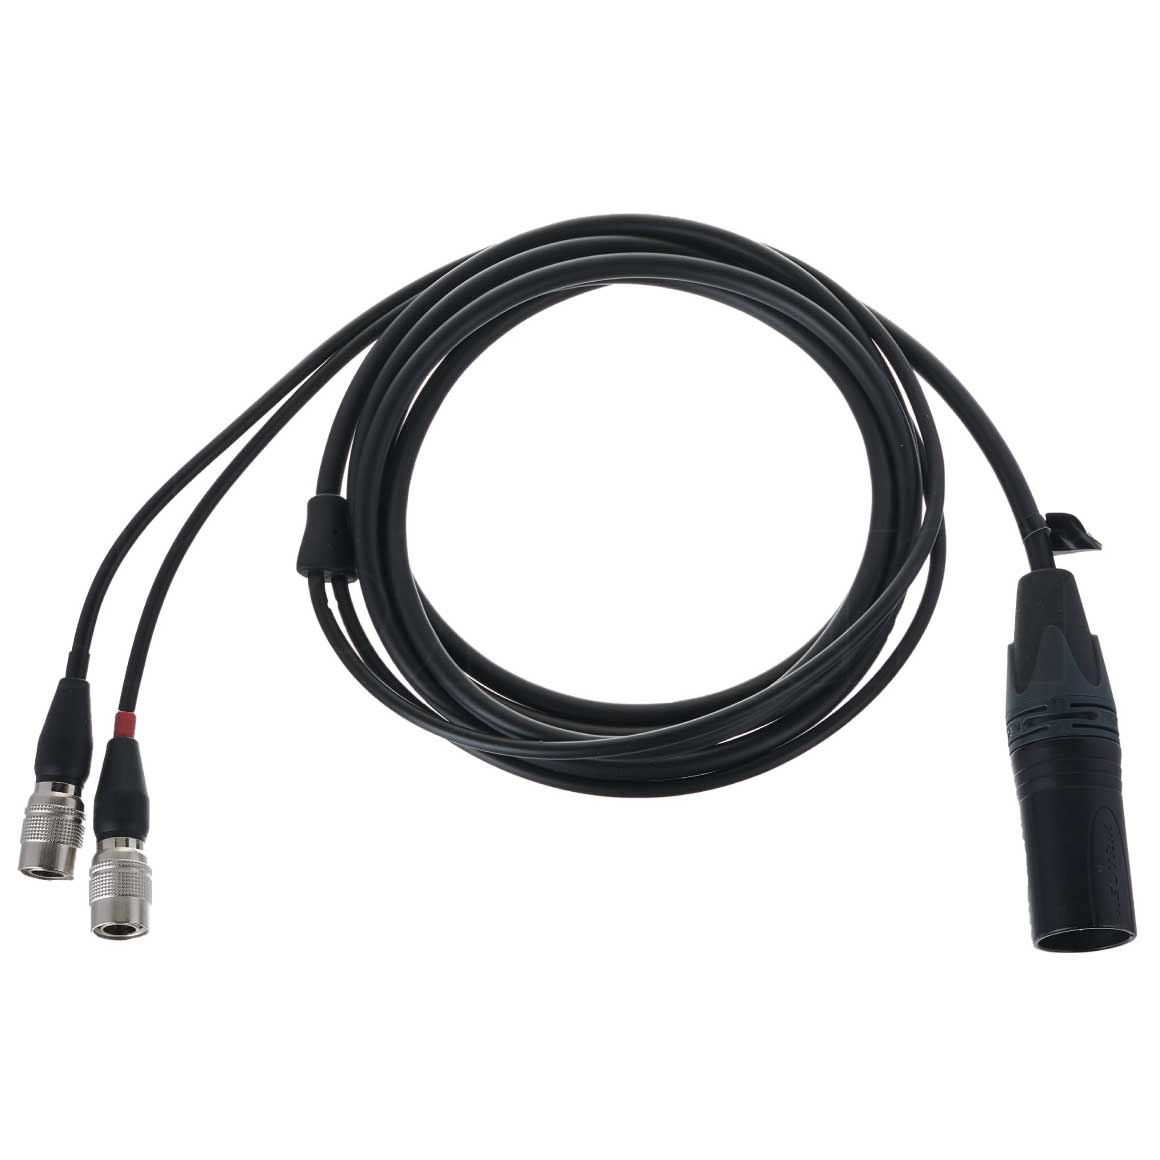 Dan Clark Audio - DUMMER Cable for AEON and ETHER Headphones